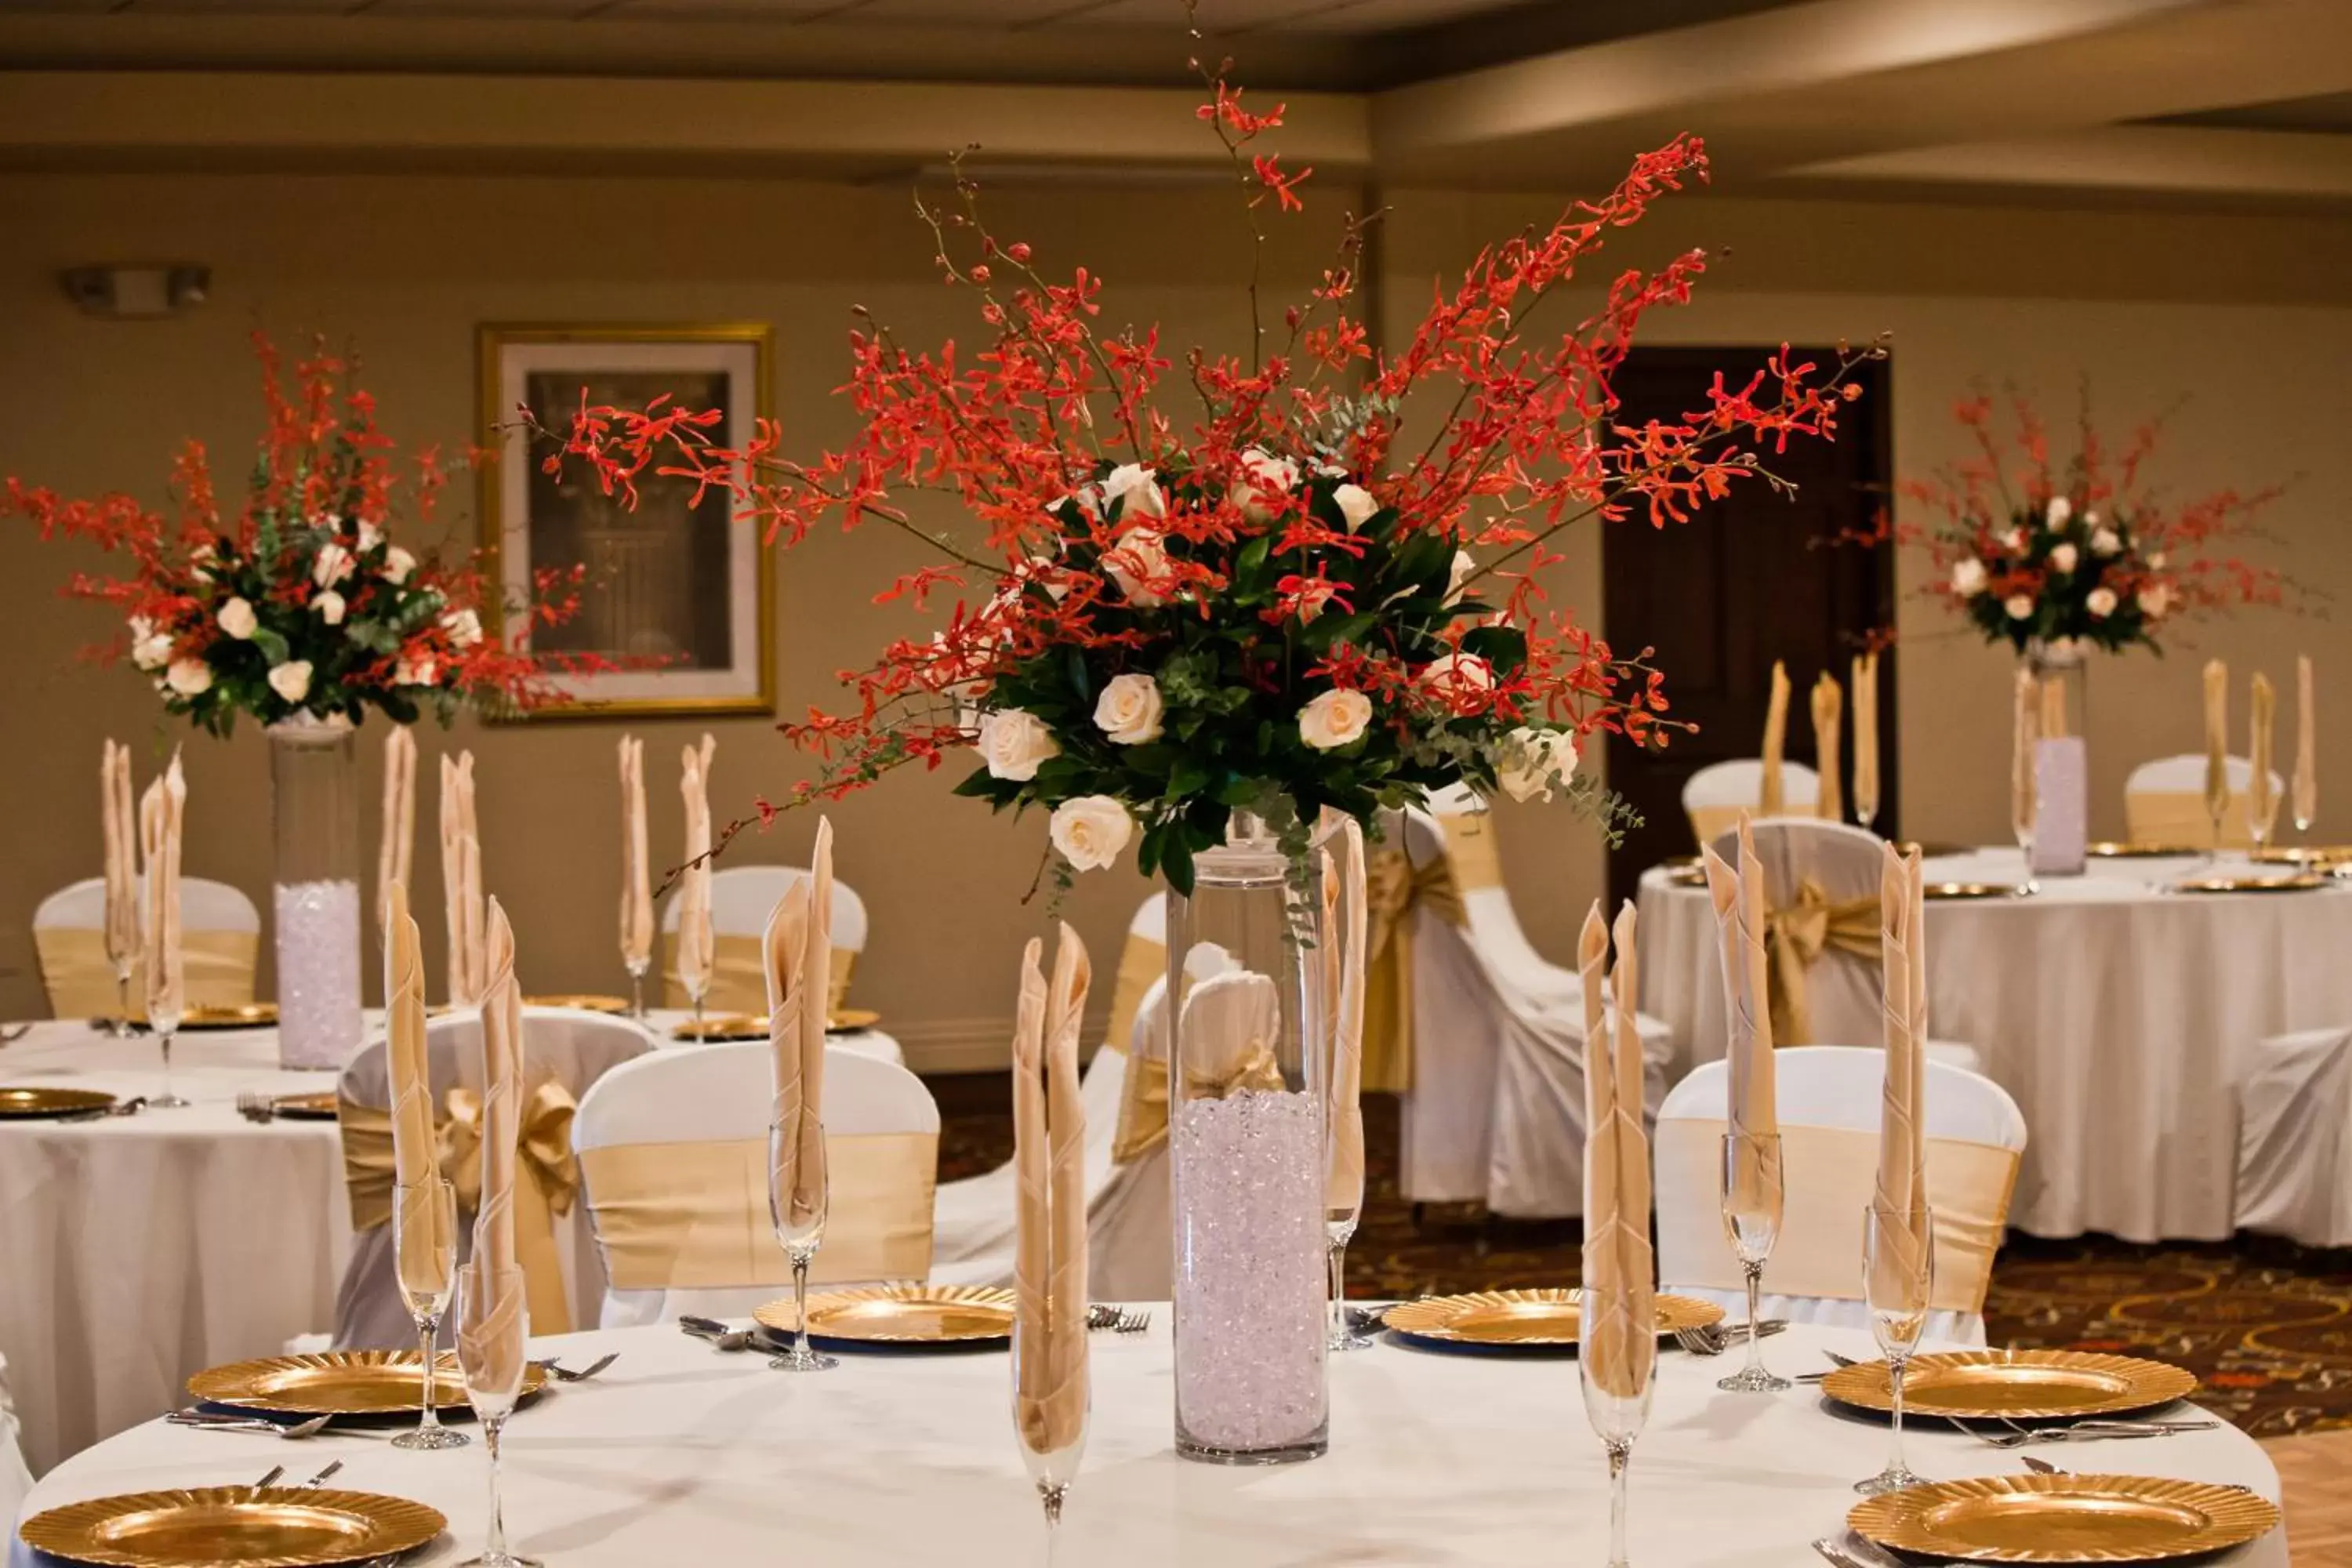 Banquet/Function facilities, Banquet Facilities in Tuscany Suites & Casino